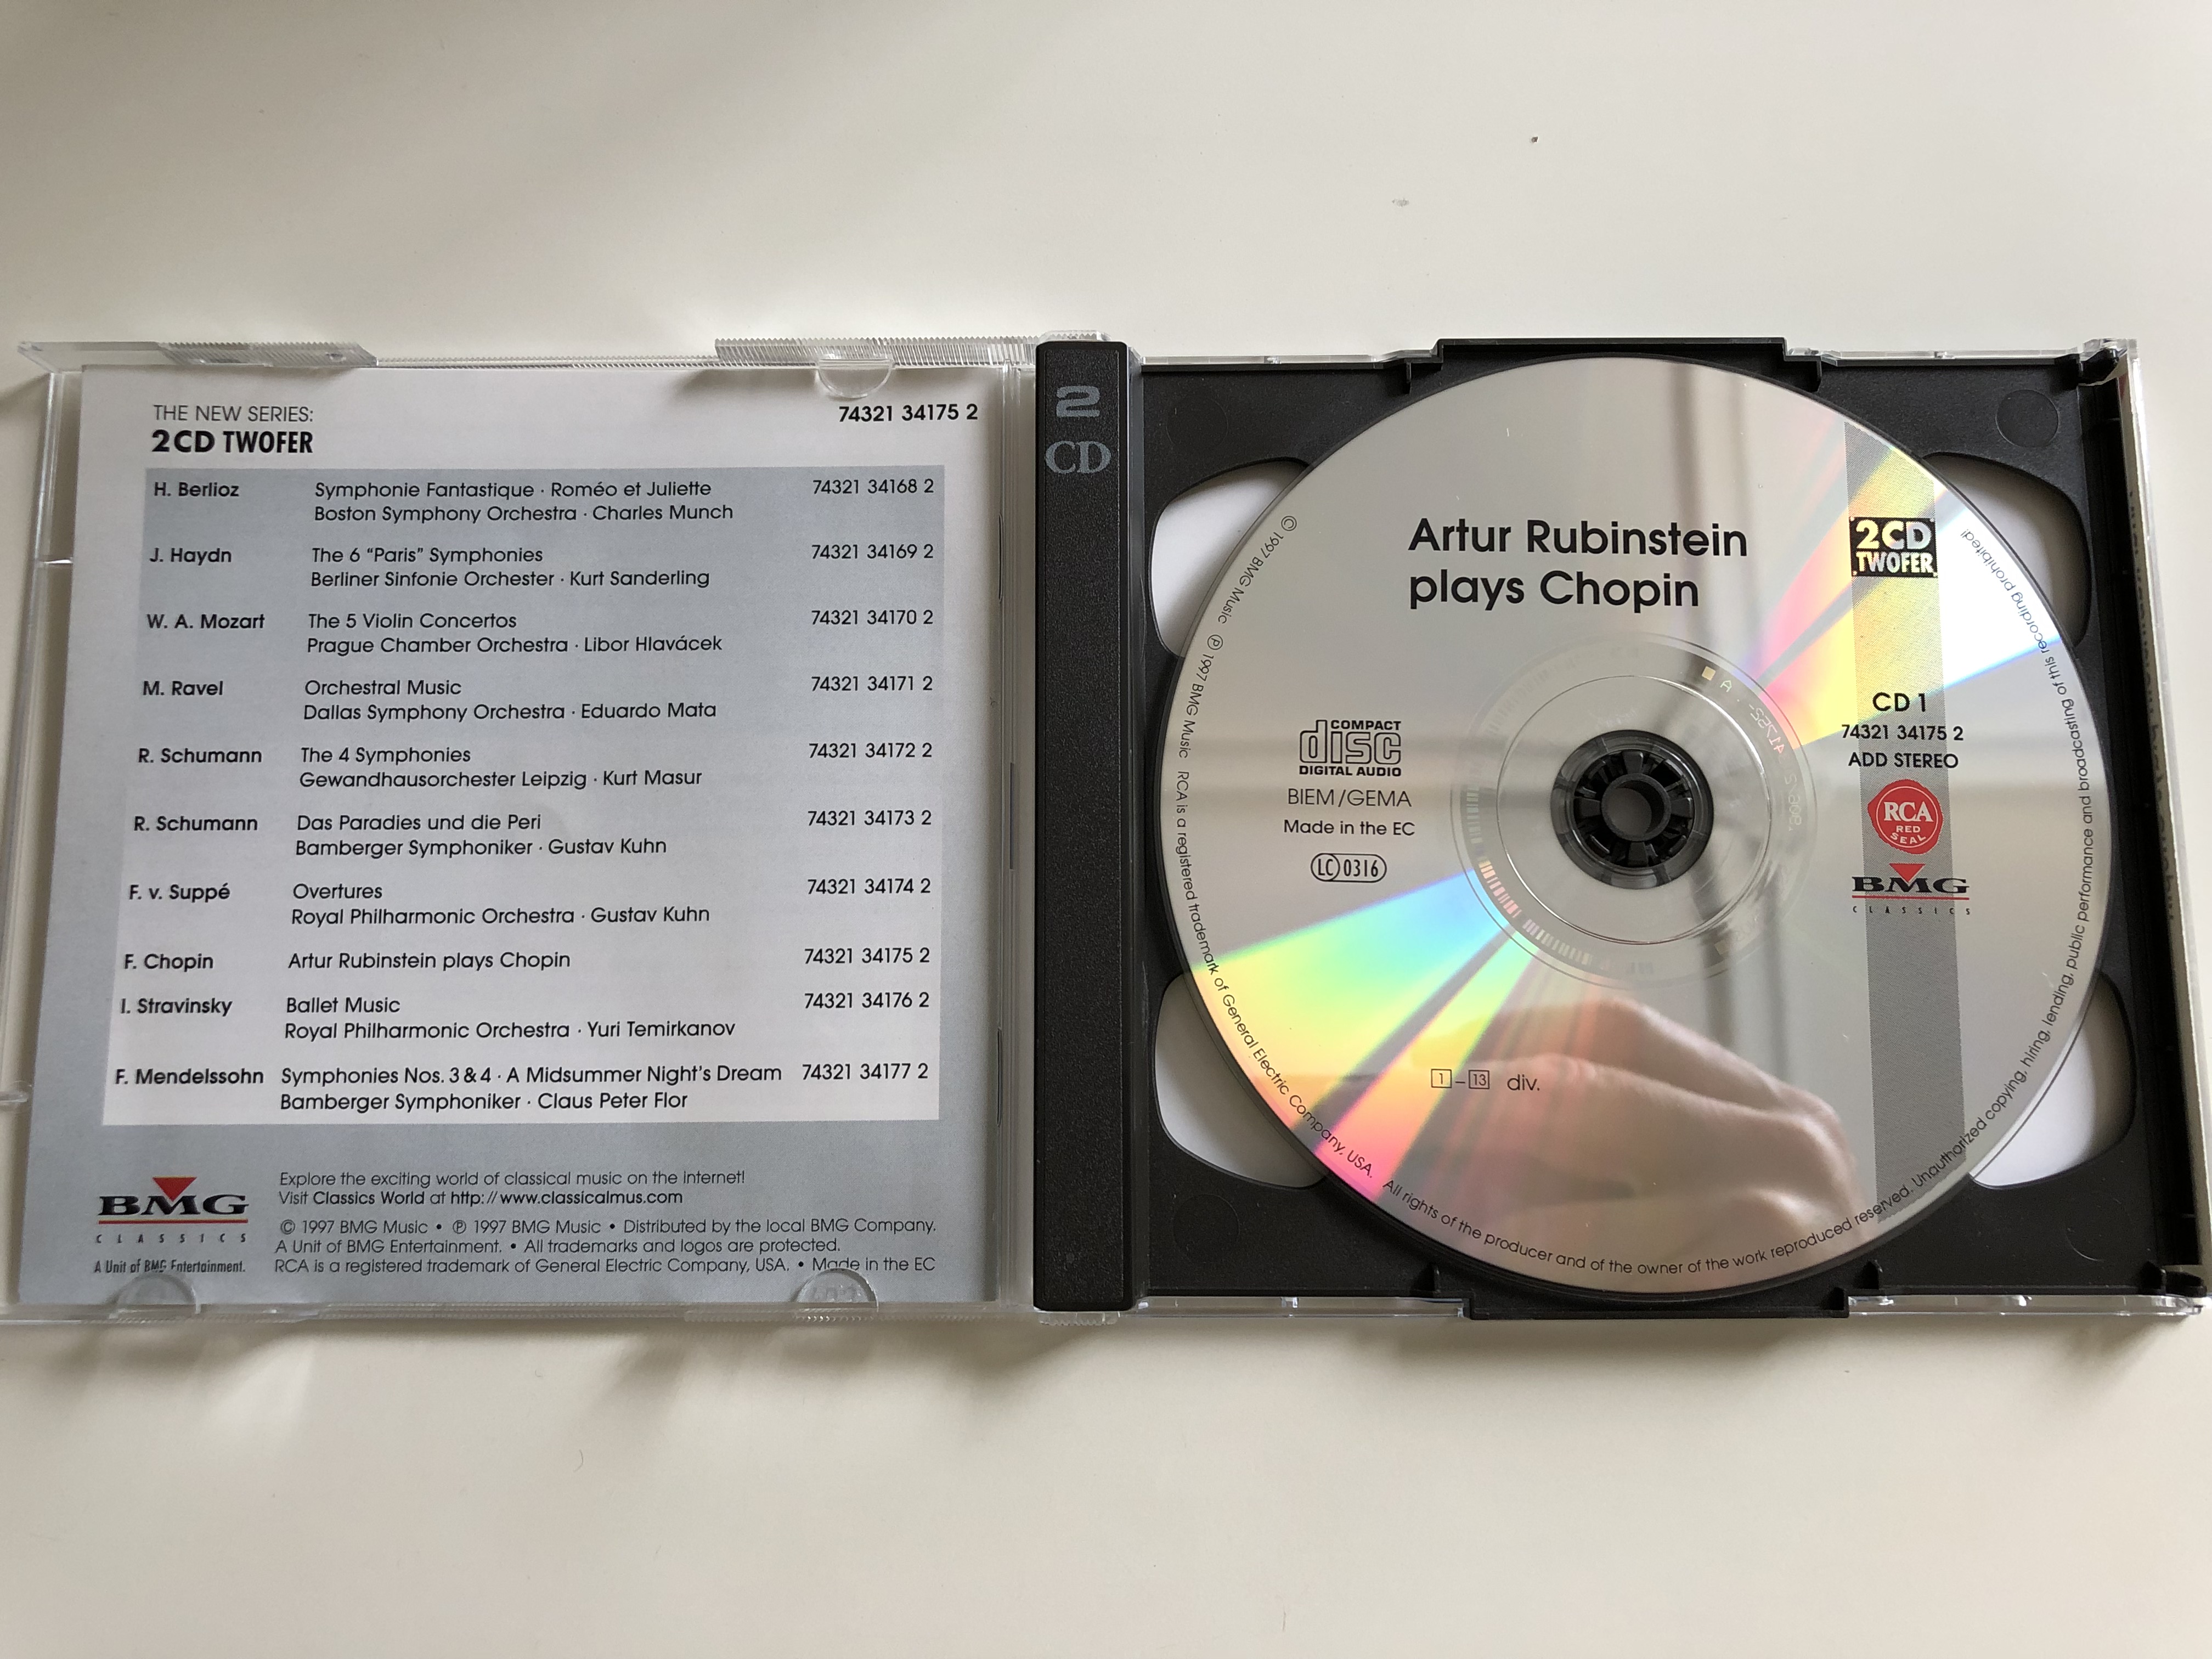 artur-rubinstein-plays-chopin-symphony-of-the-air-alfred-wallenstein-2cd-audio-cd-rca-read-seal-7-.jpg